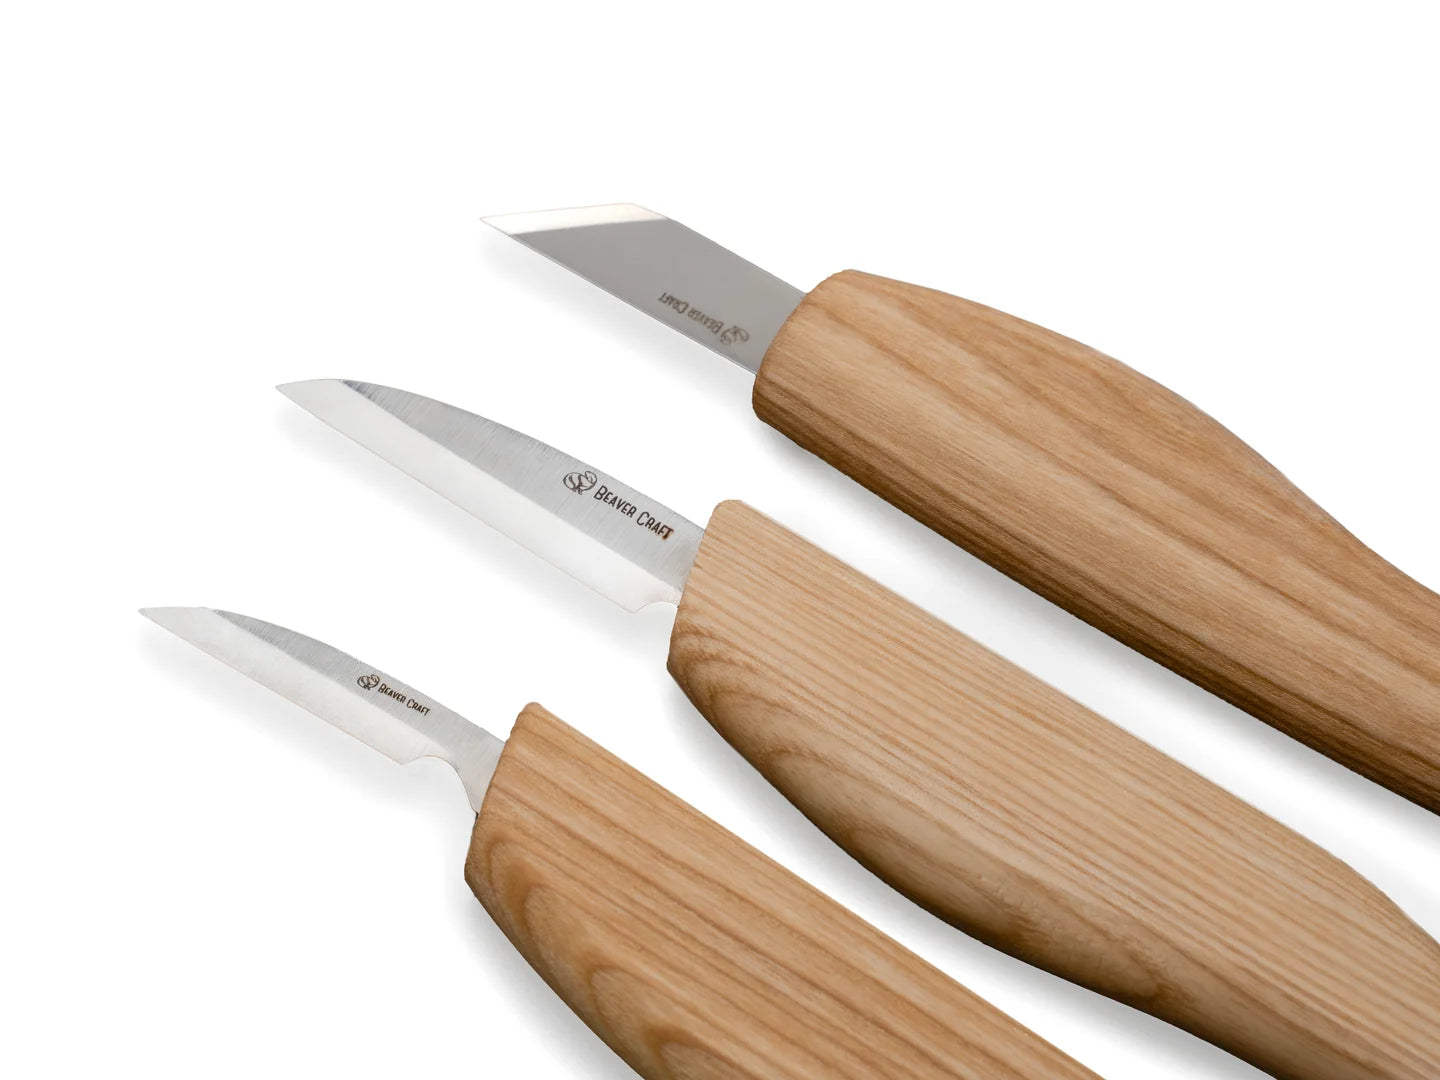 Beginner starting wood carving tools kit & set - BeaverCraft